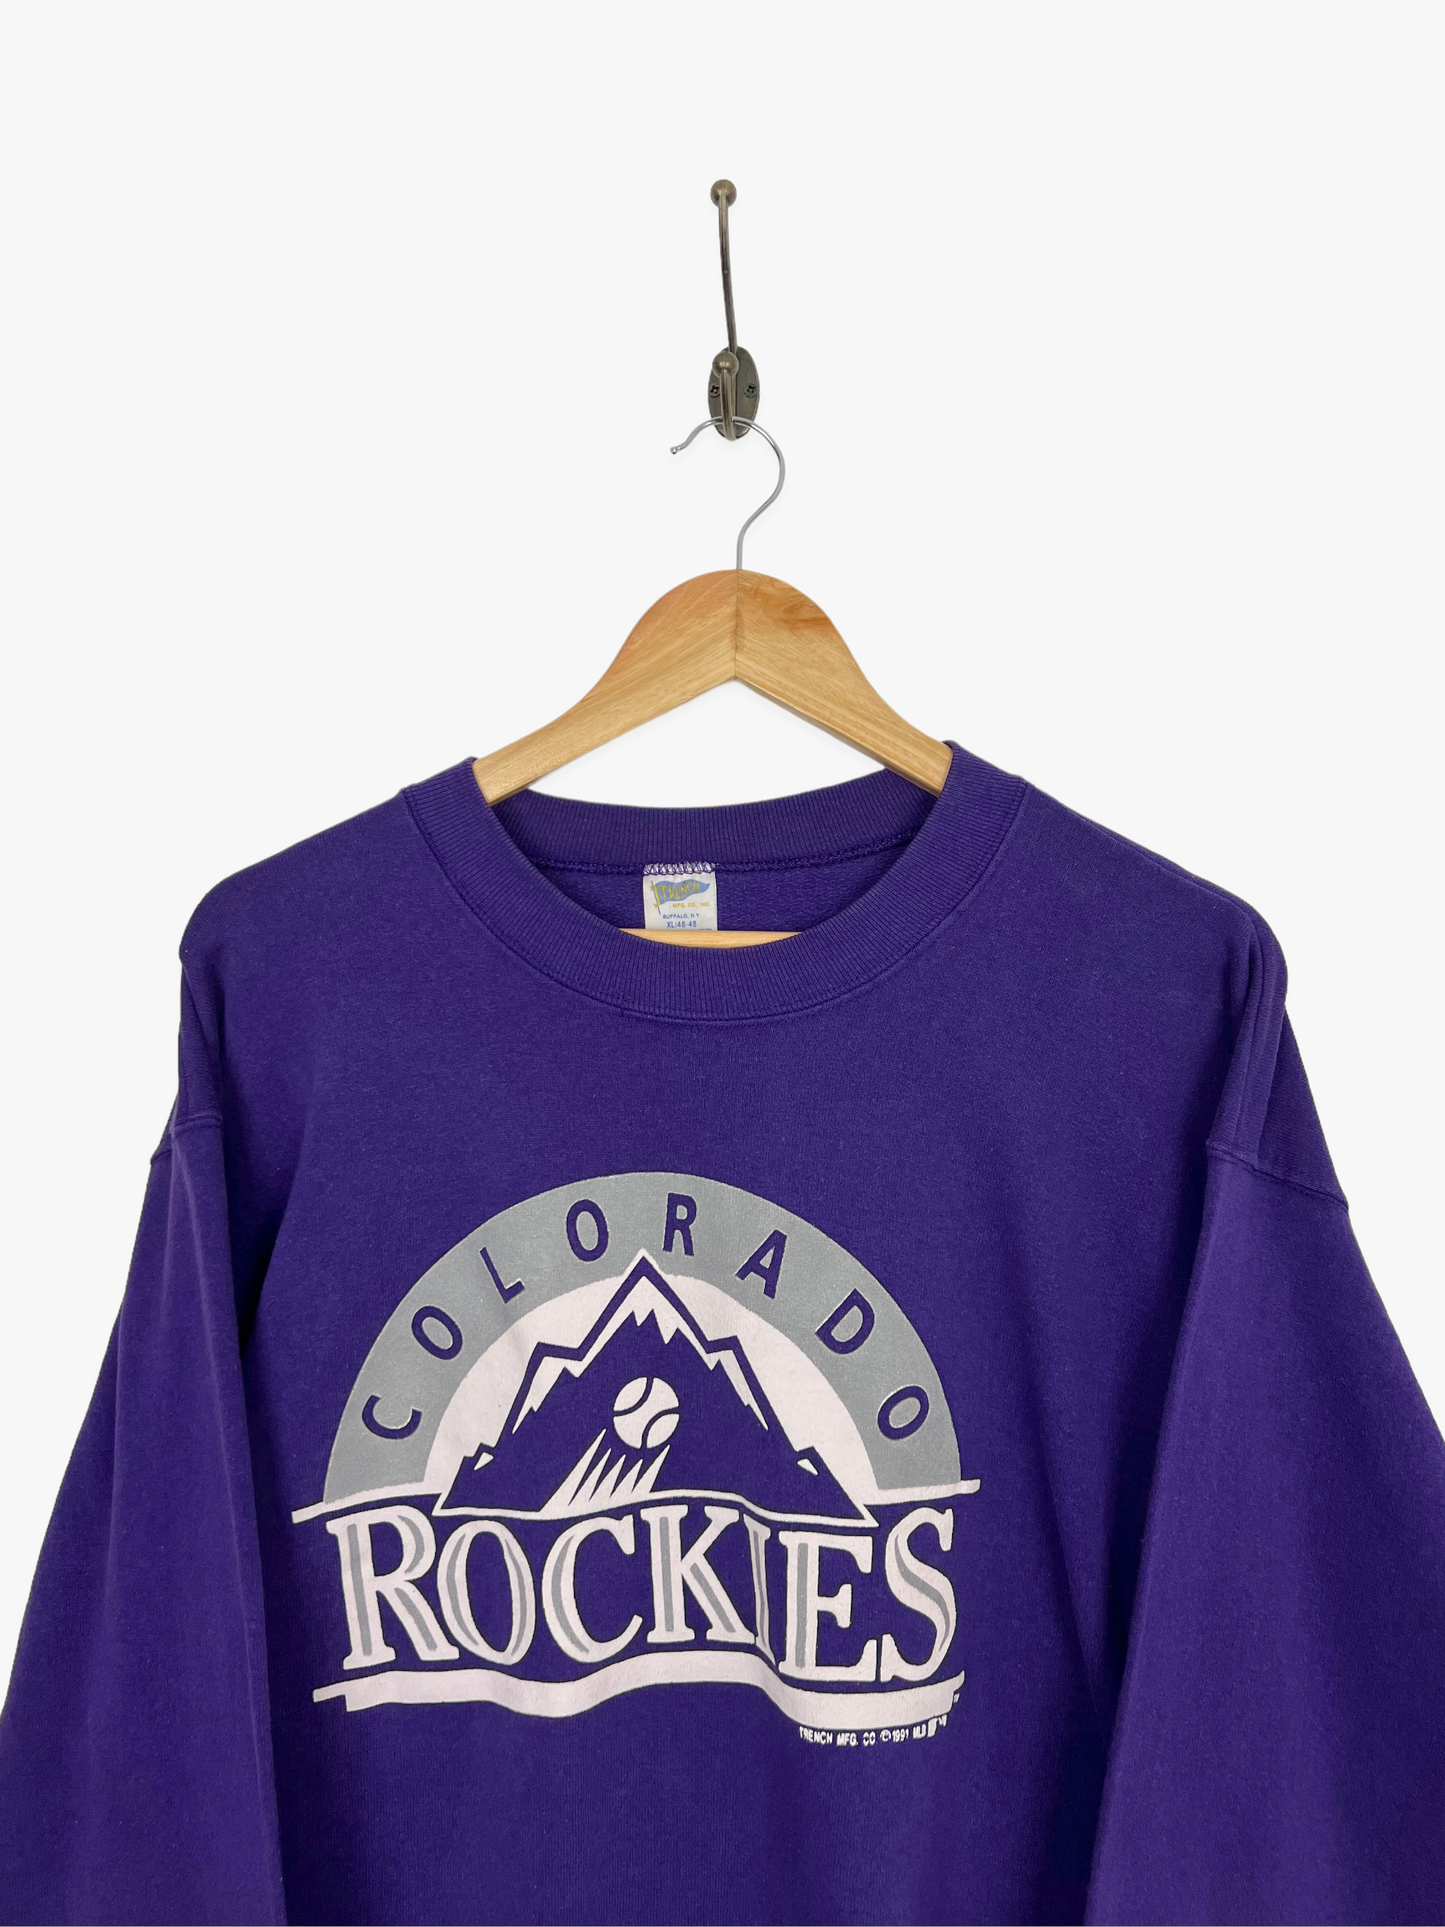 1991 Colorado Rockies MLB USA Made Lightweight Vintage Sweatshirt Size 10